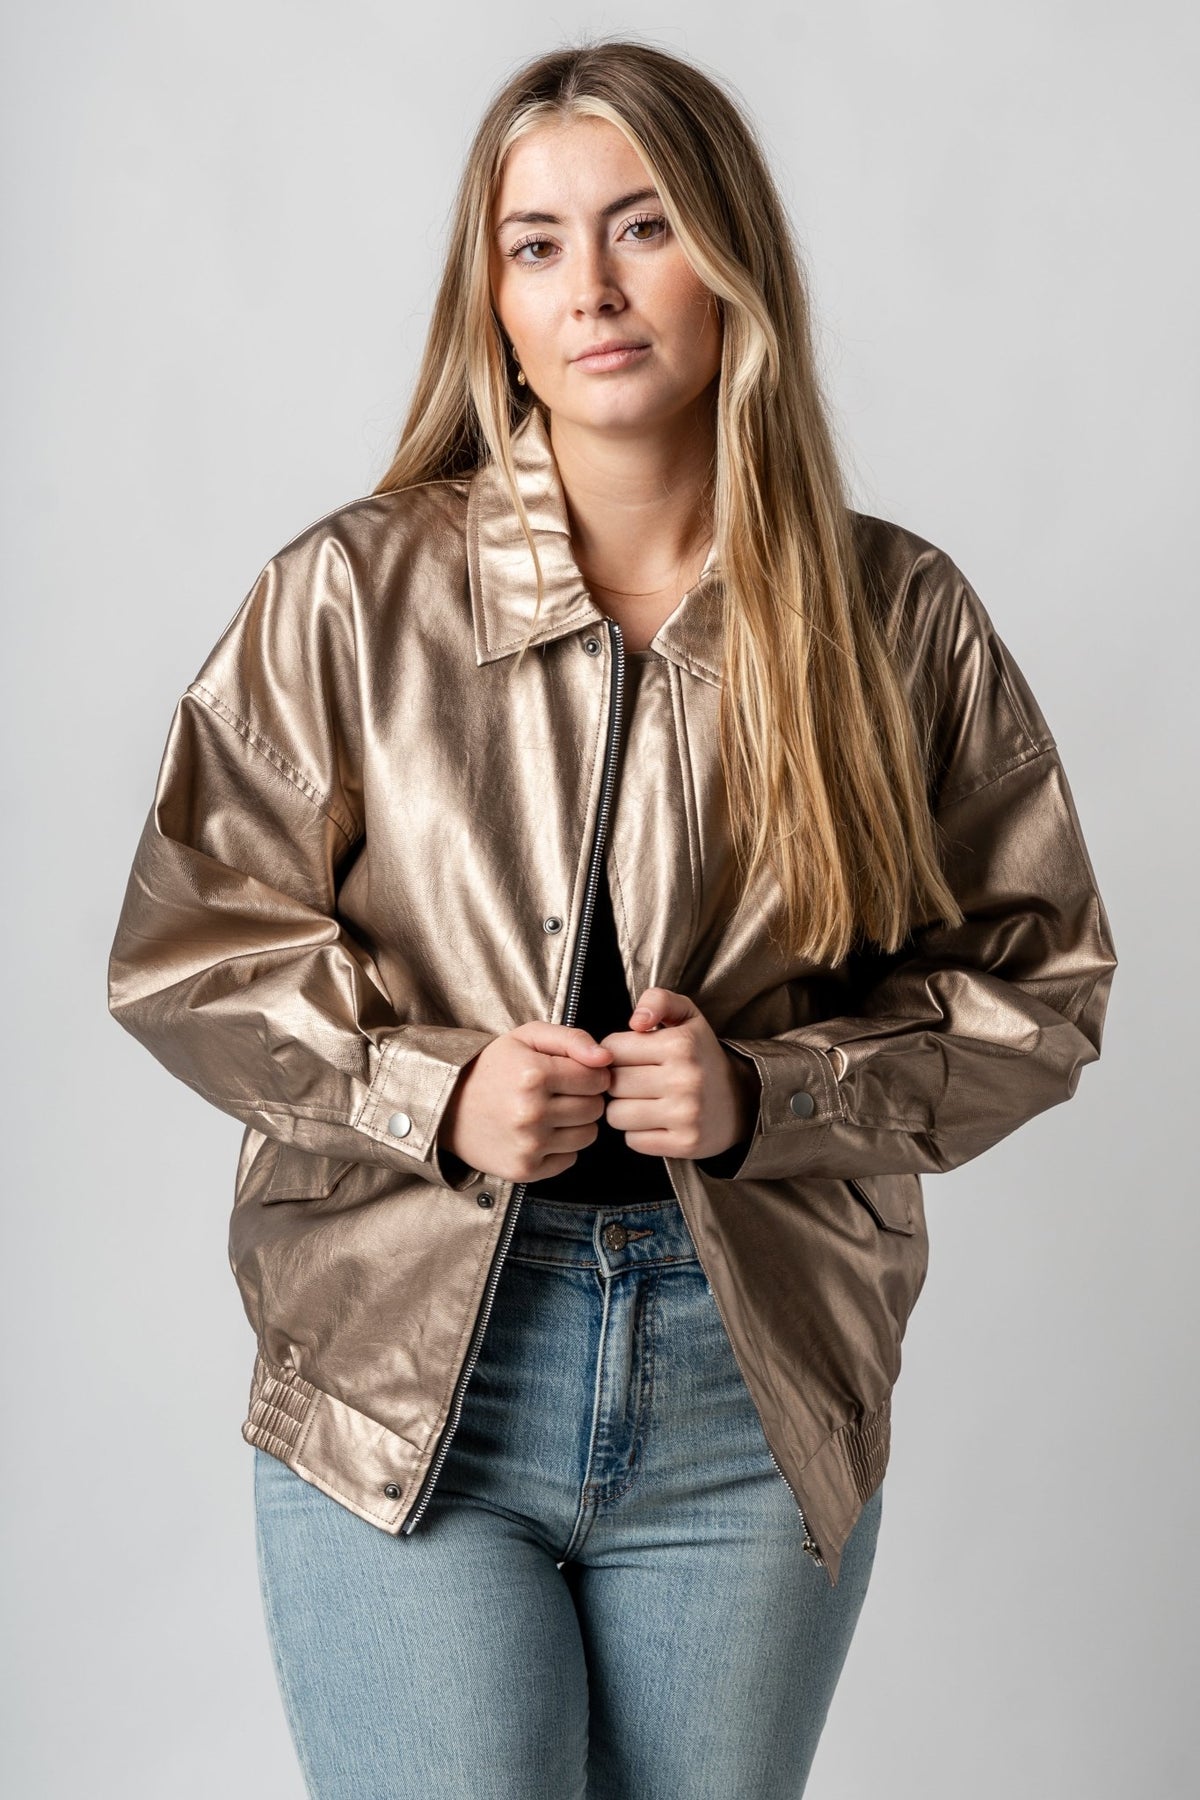 Metallic bomber jacket gunmetal – Trendy Jackets | Cute Fashion Blazers at Lush Fashion Lounge Boutique in Oklahoma City